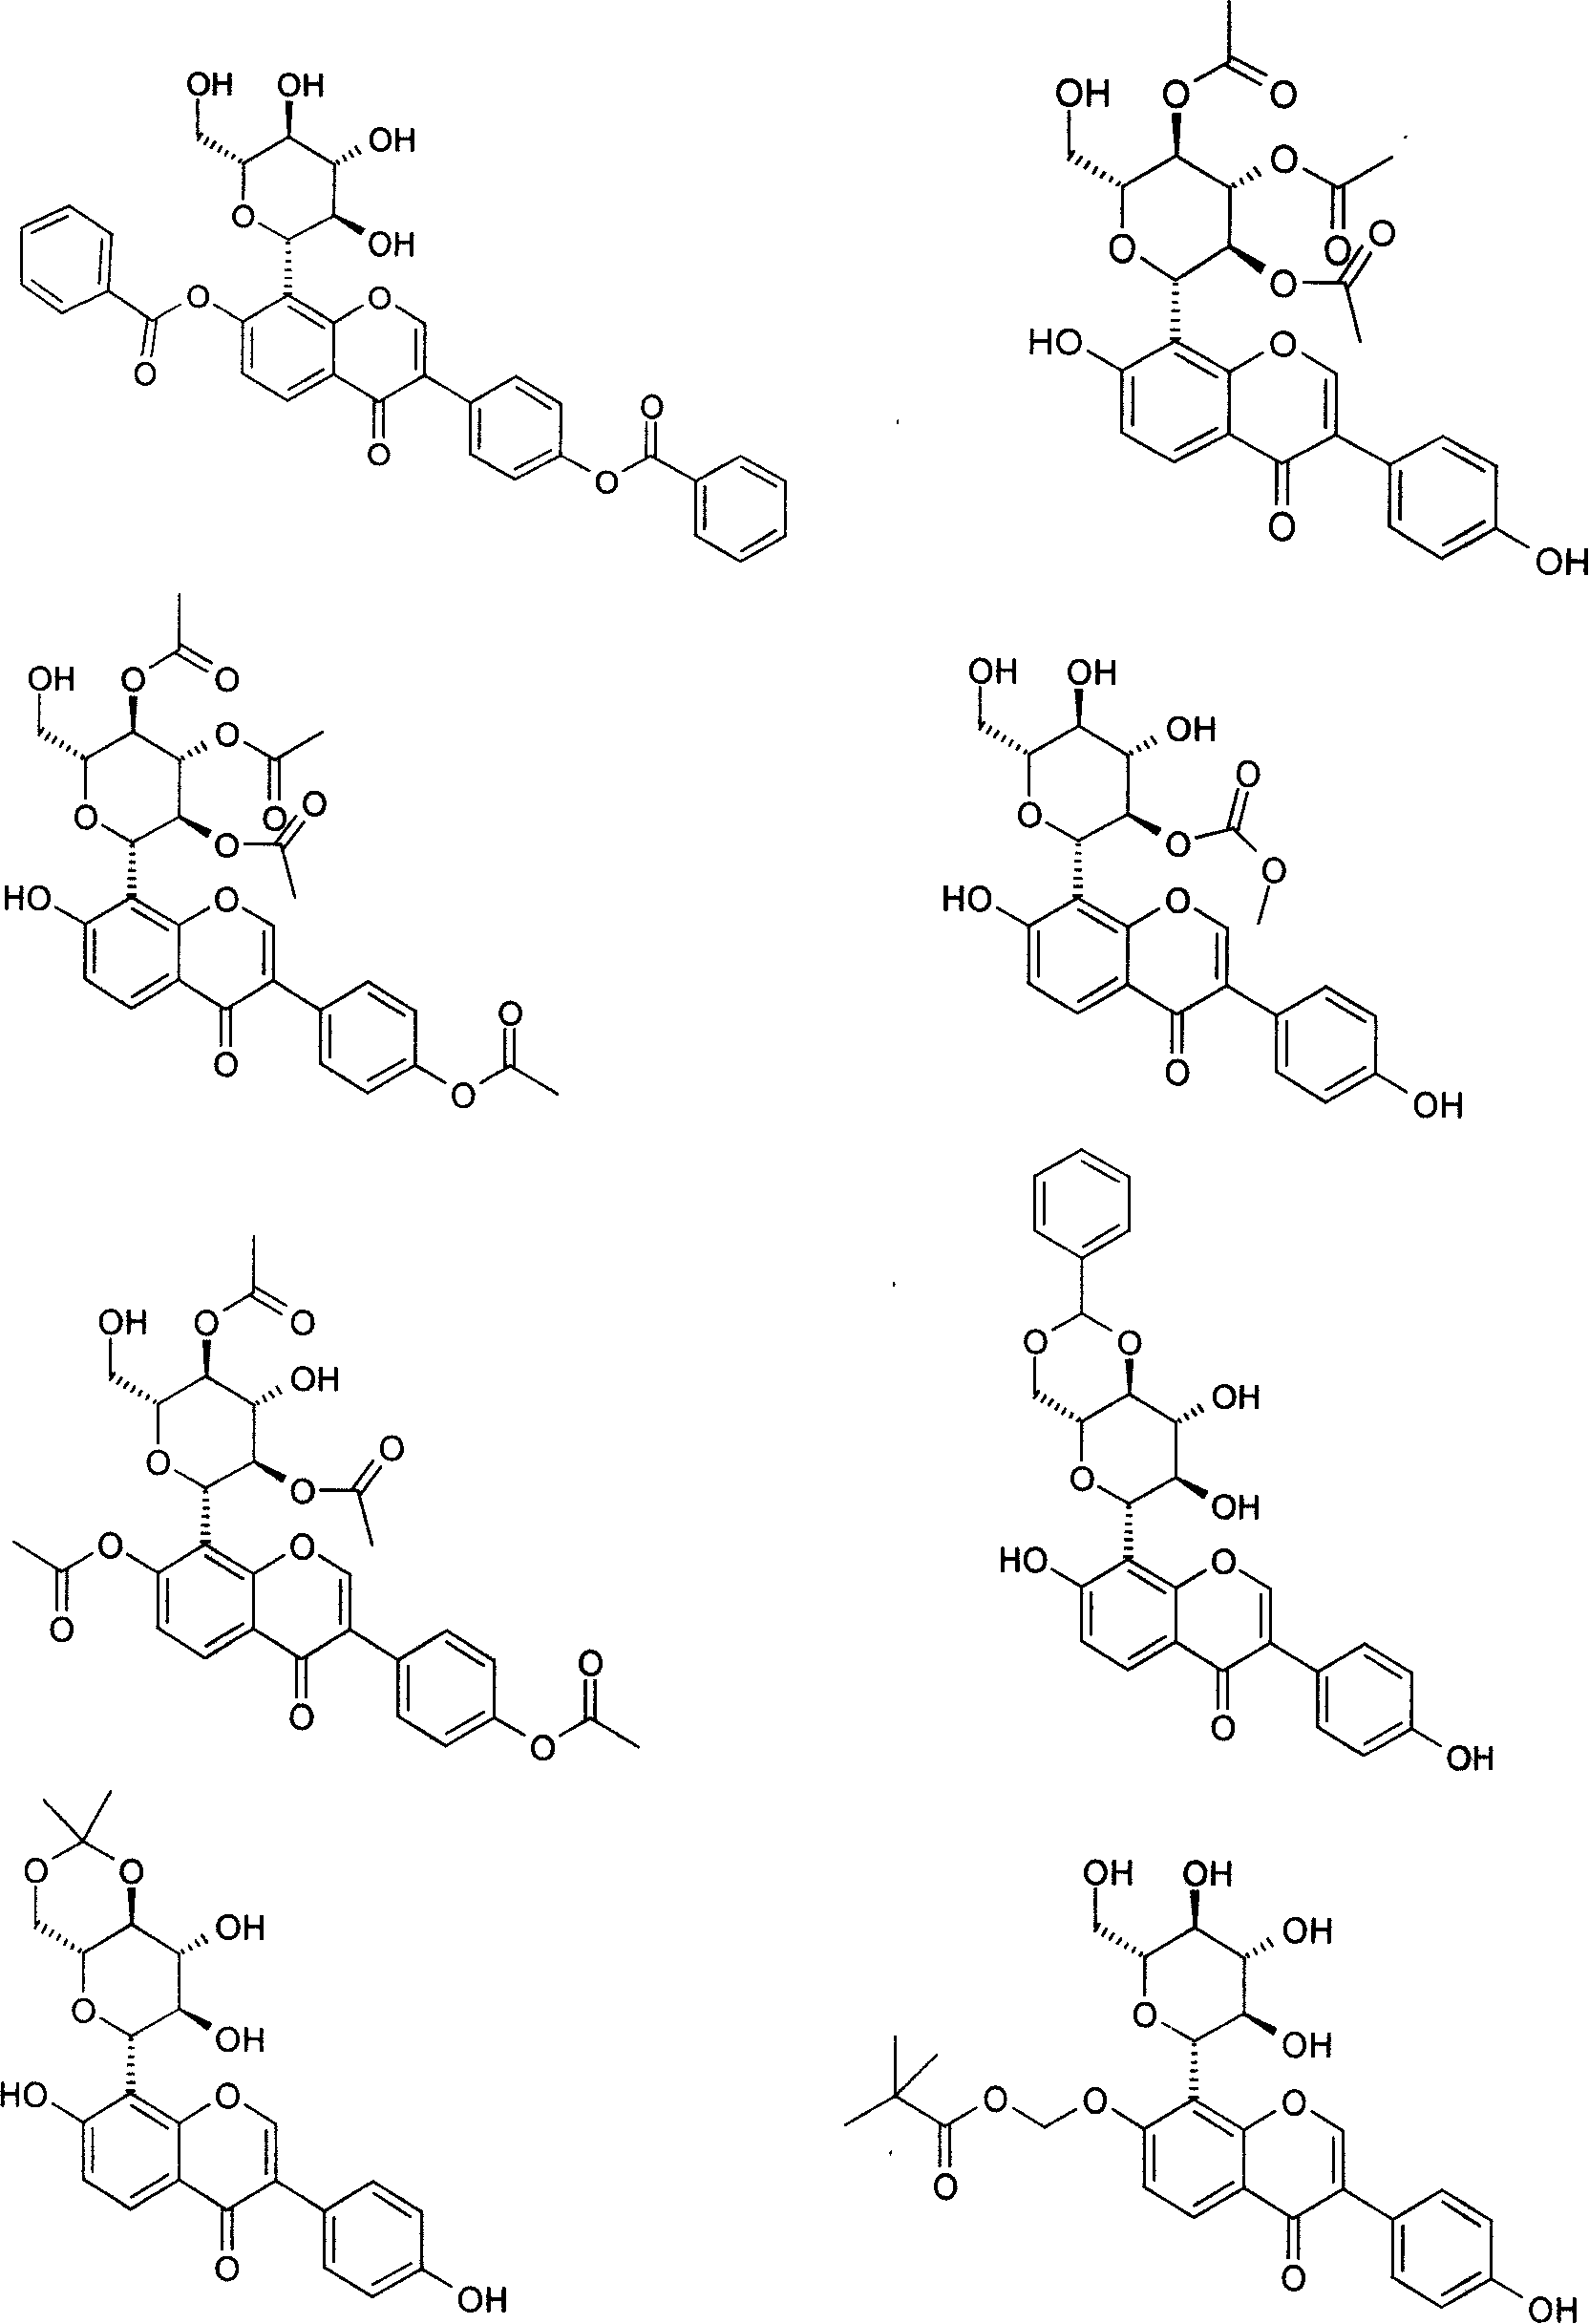 Puerarin derivative and its medicinal use